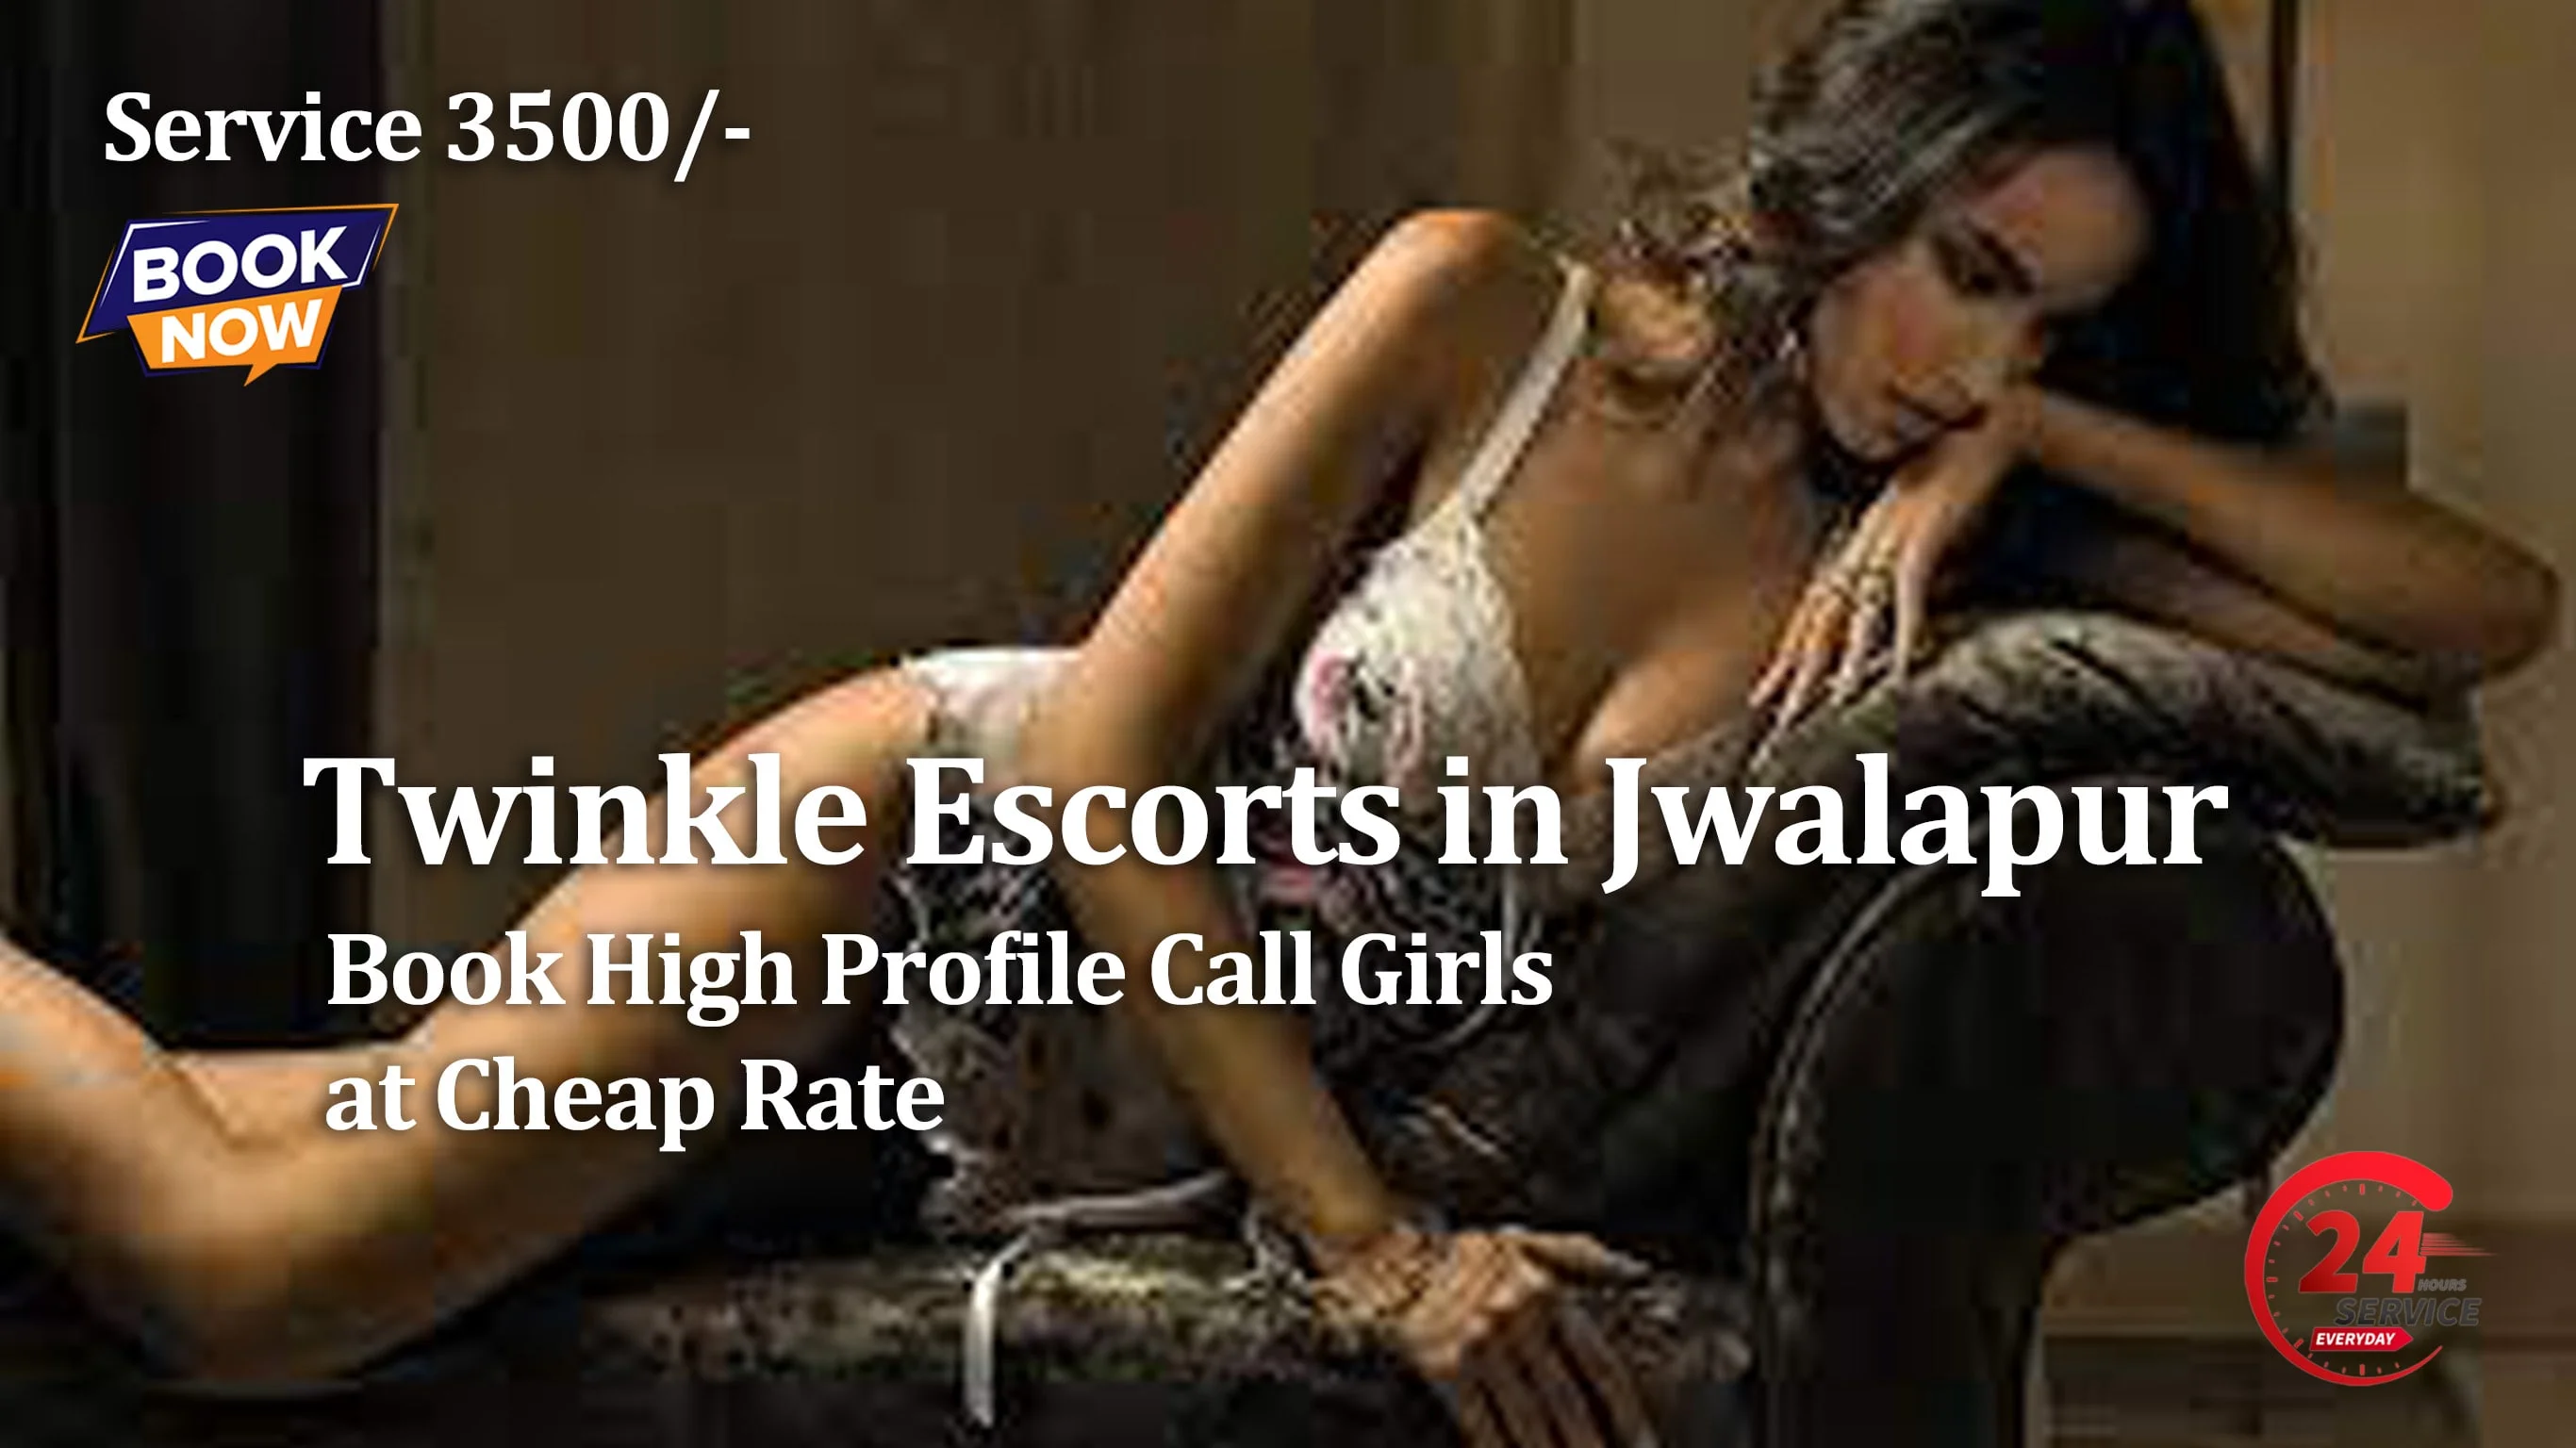 Jwalapur Escort give description of twinkle escort service charges